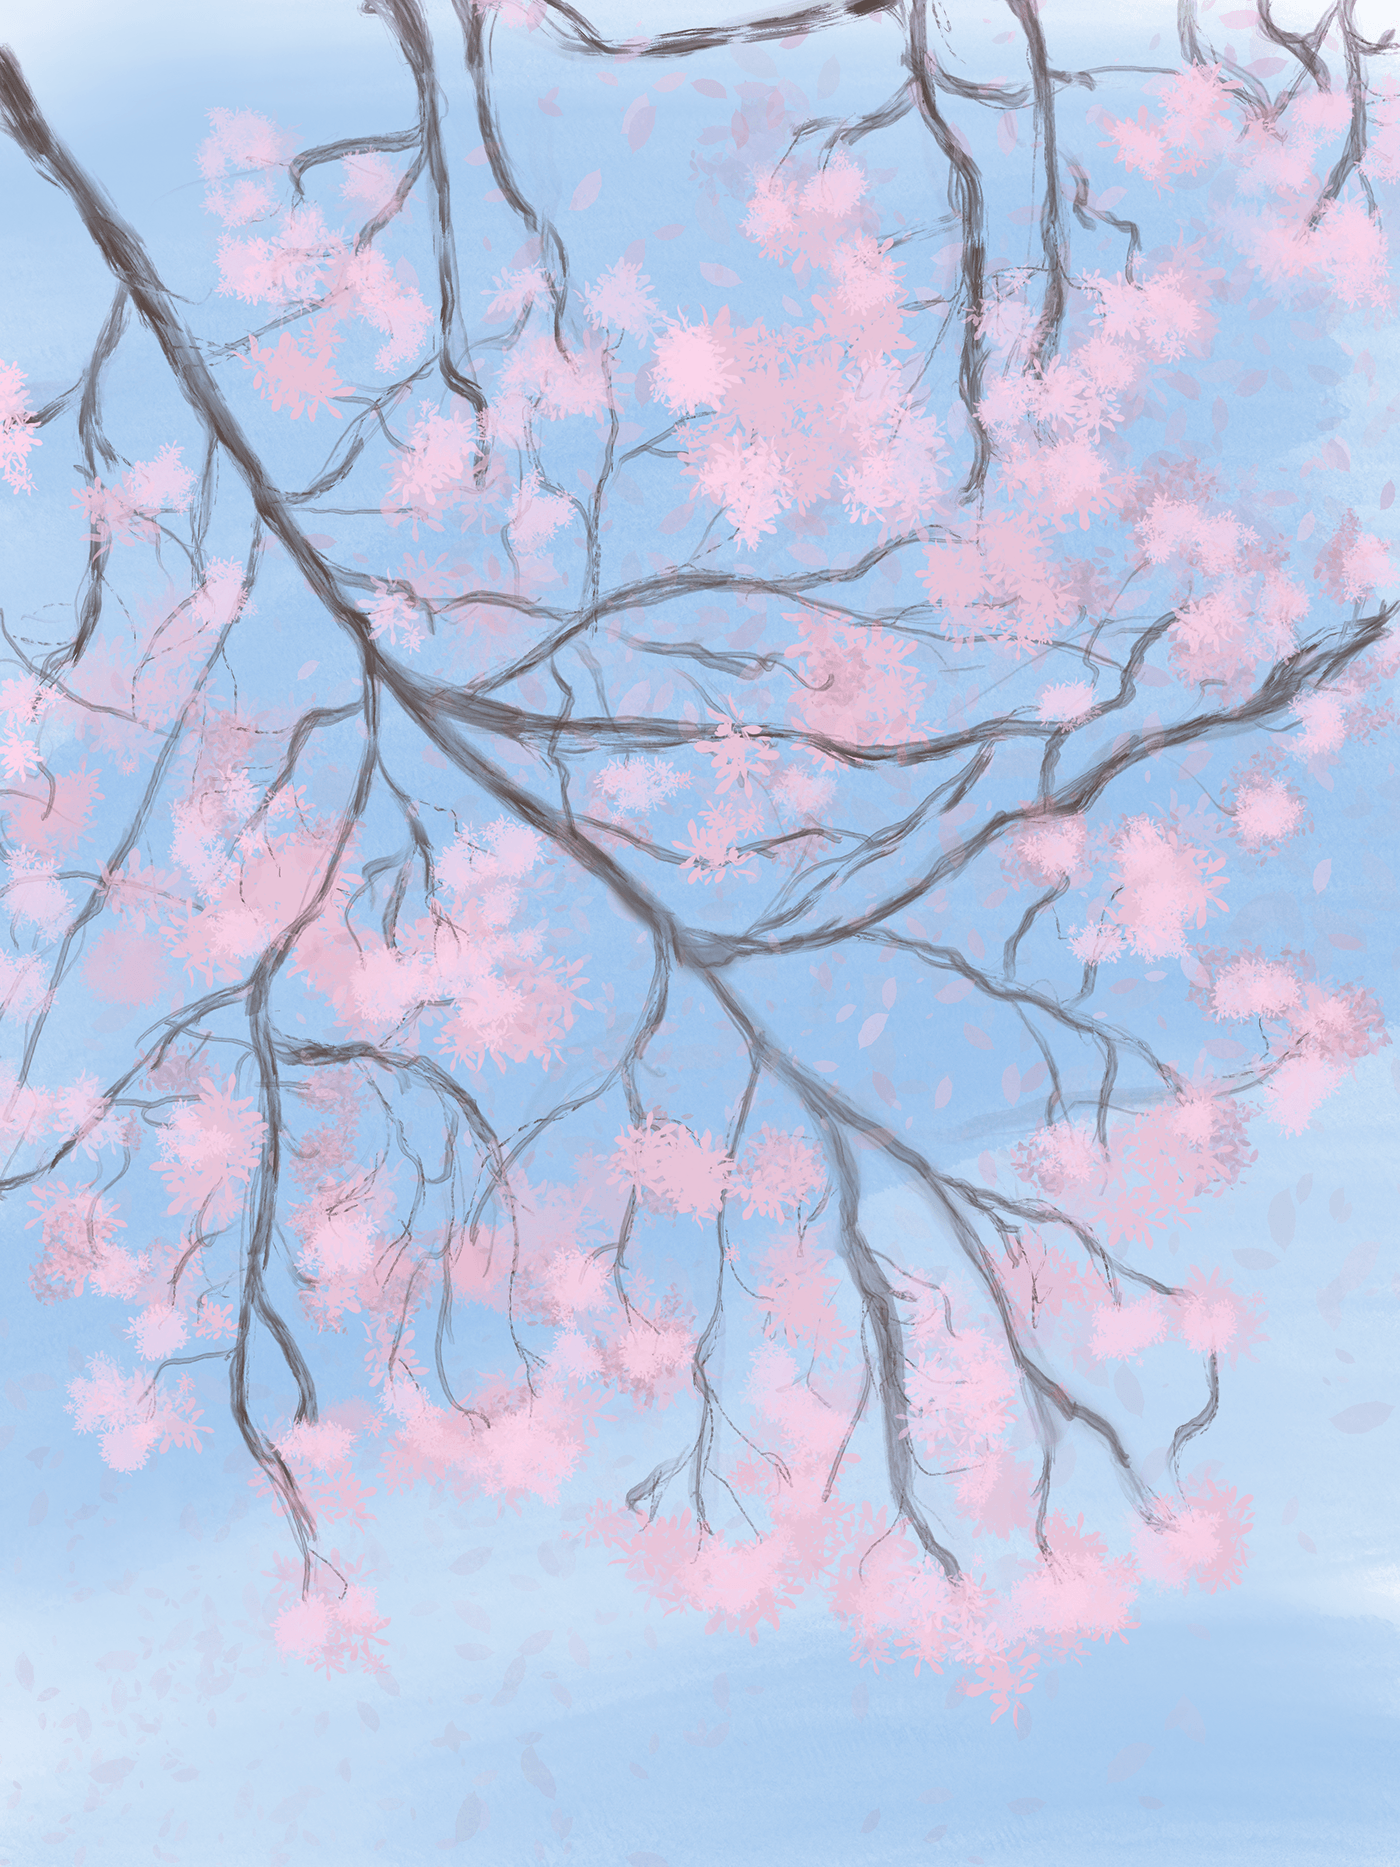 branches of cherry blossom (sakura) over a blue sky